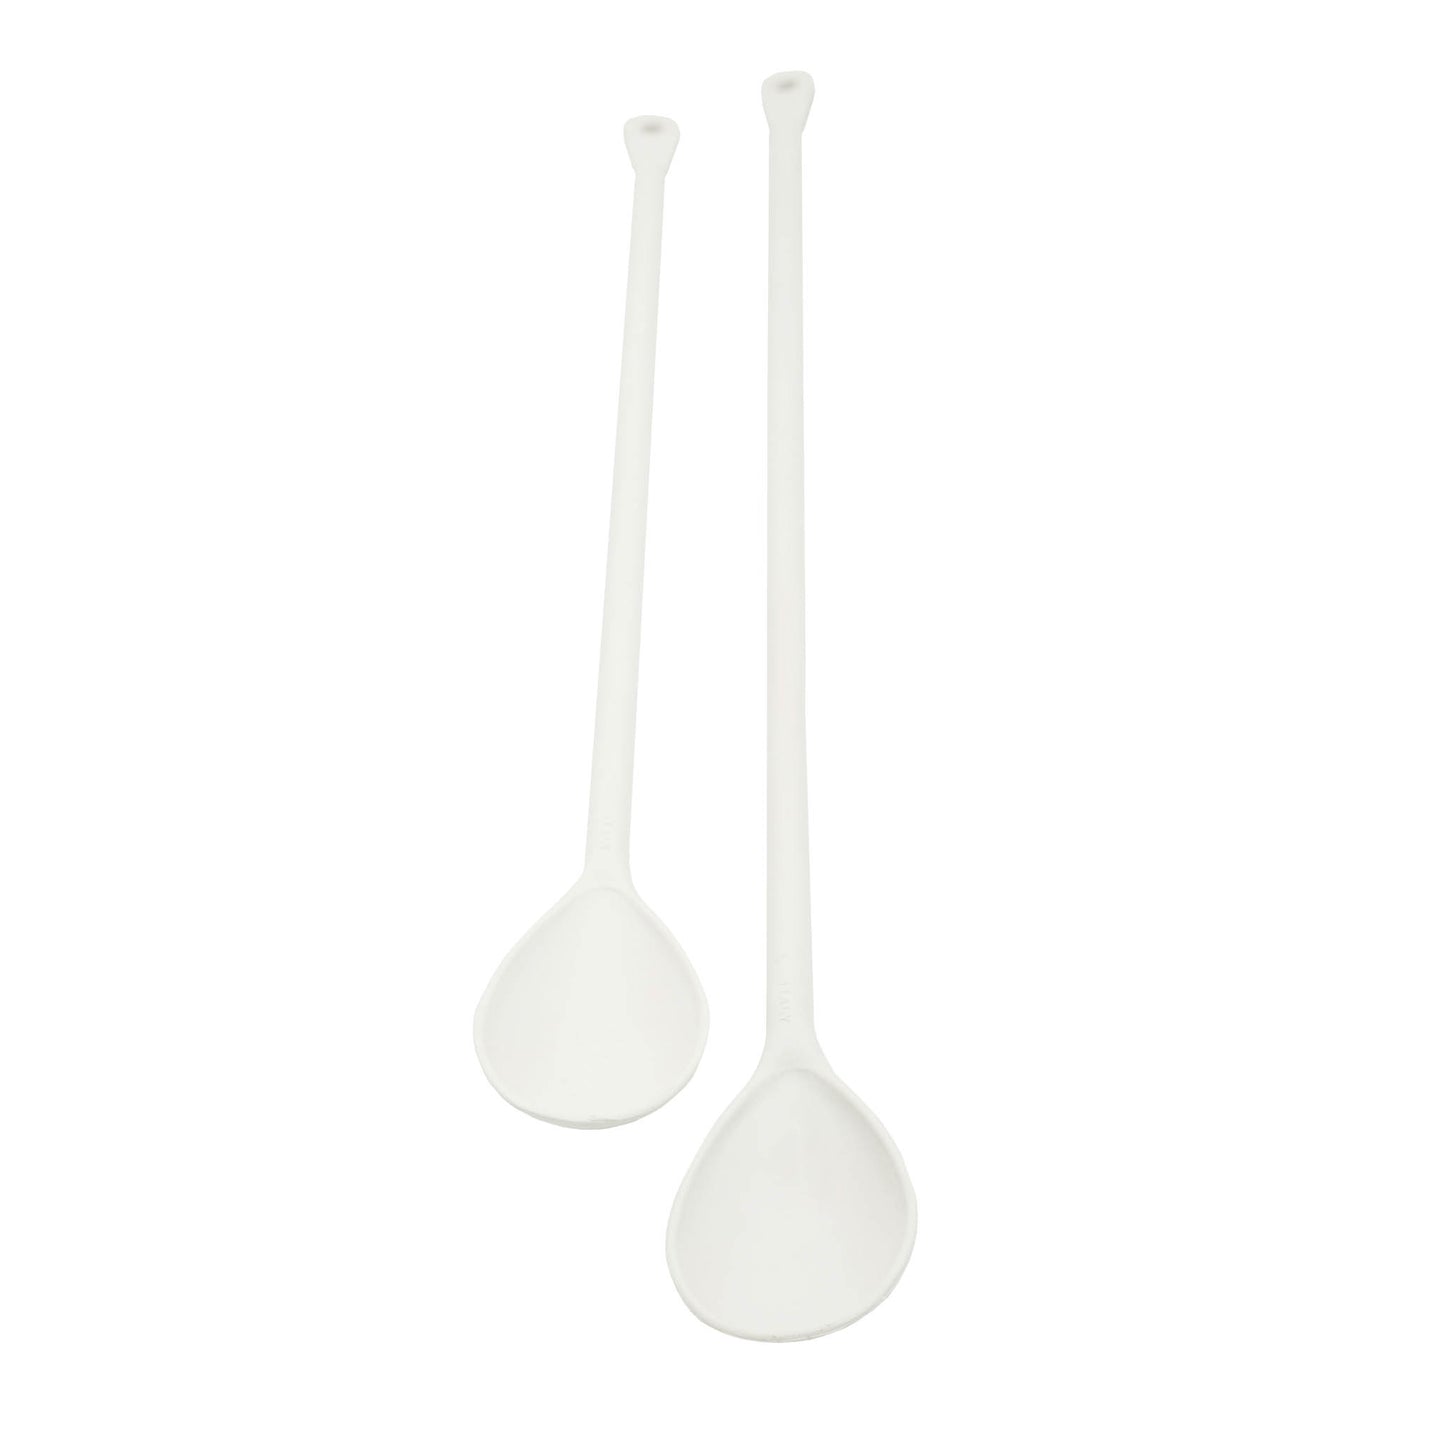 Spoon Food Grade Plastic